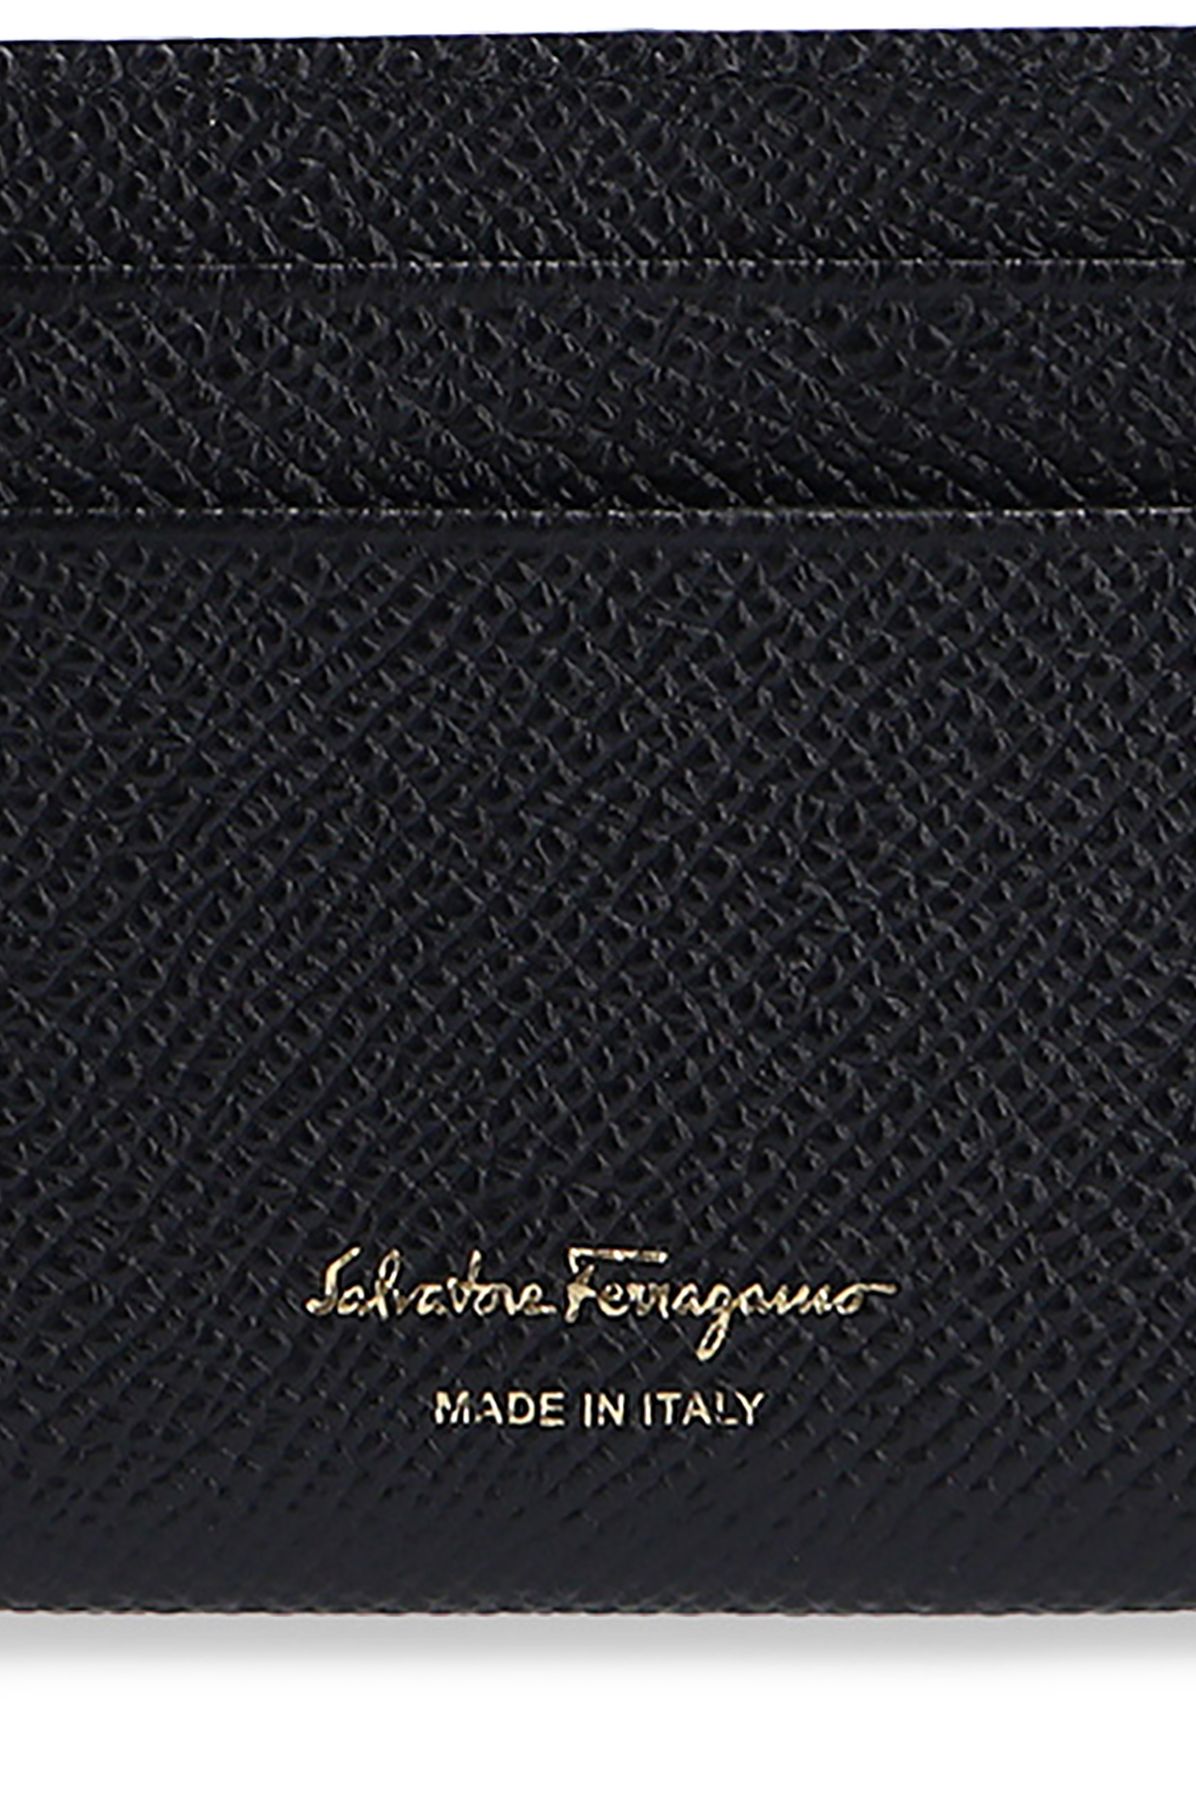 Salvatore Ferragamo Printed card case